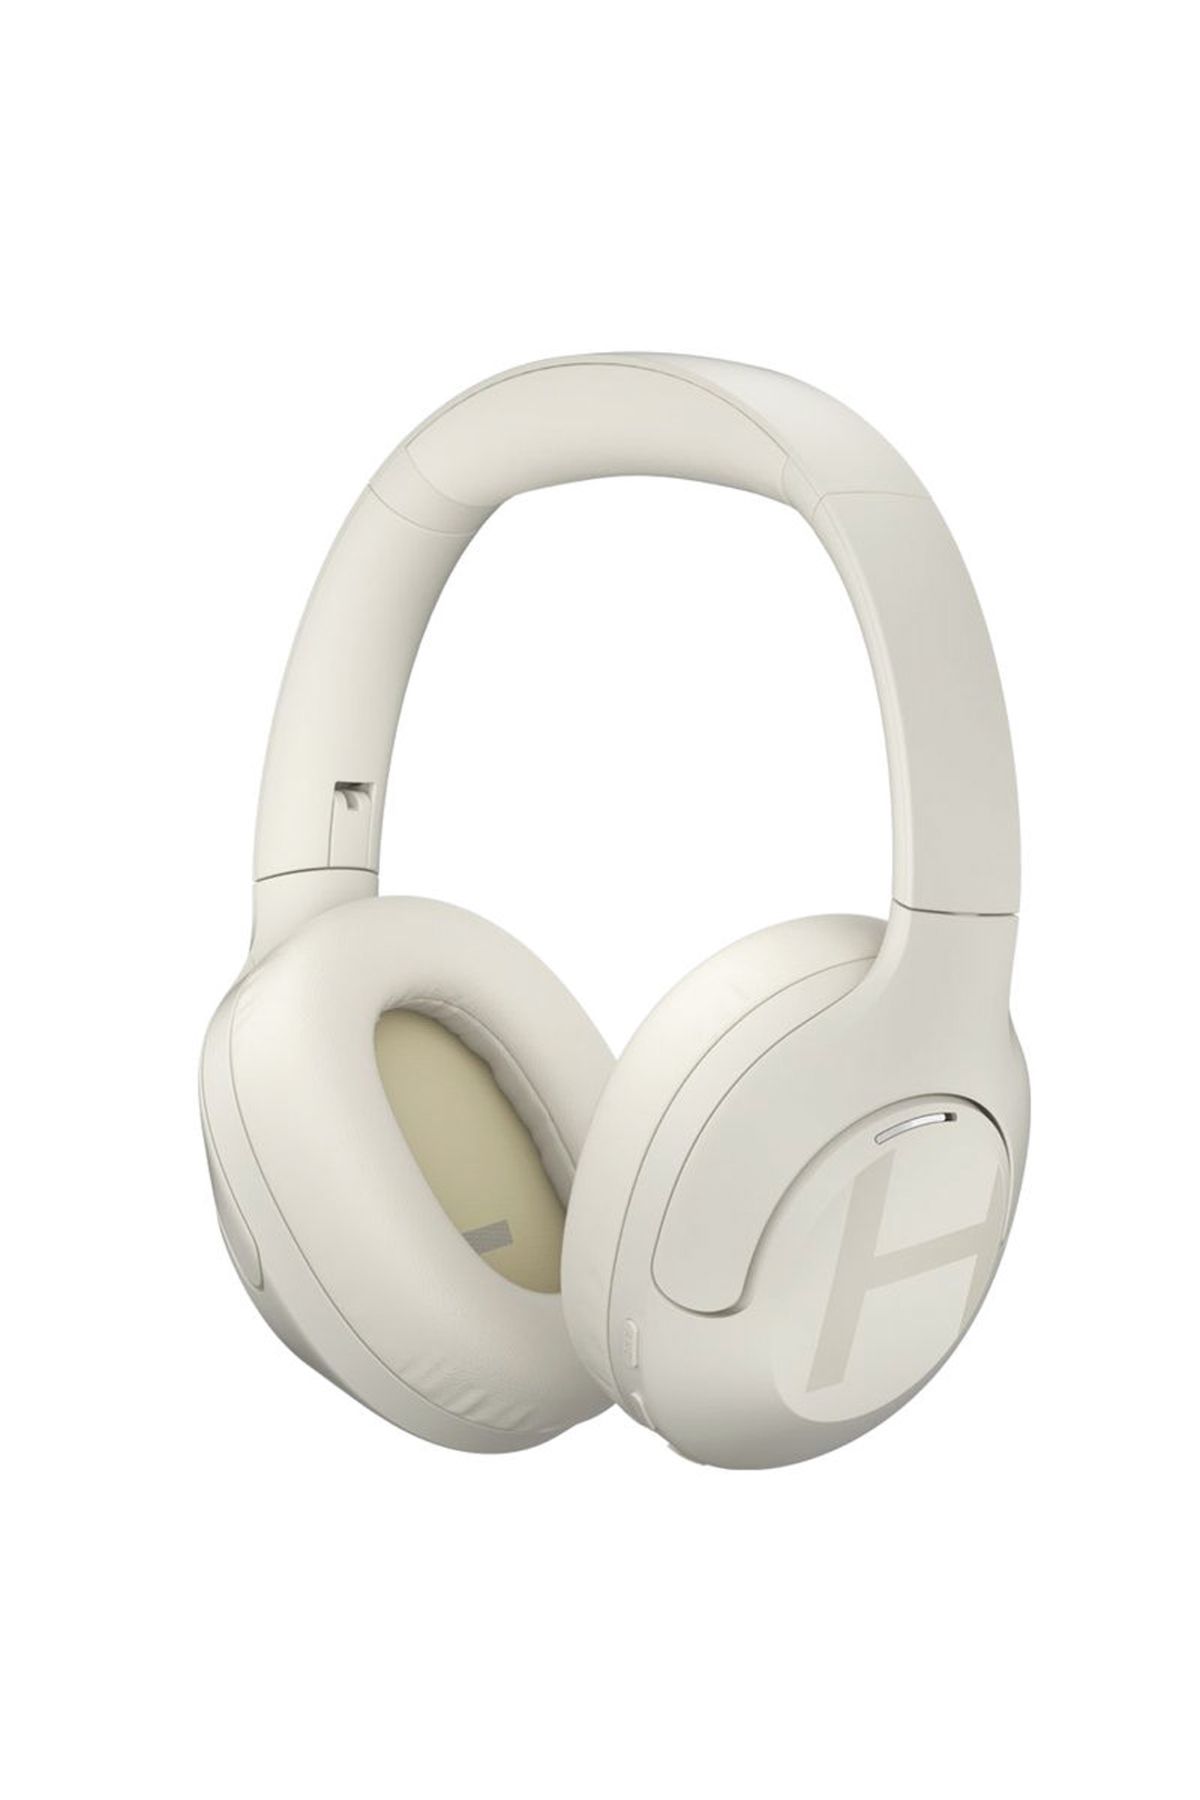 Haylou S35 ANC Beyaz Kulaküstü Uyumlu  5.2 60 Saat Pil Ömrü Kablosuz Kulaklık